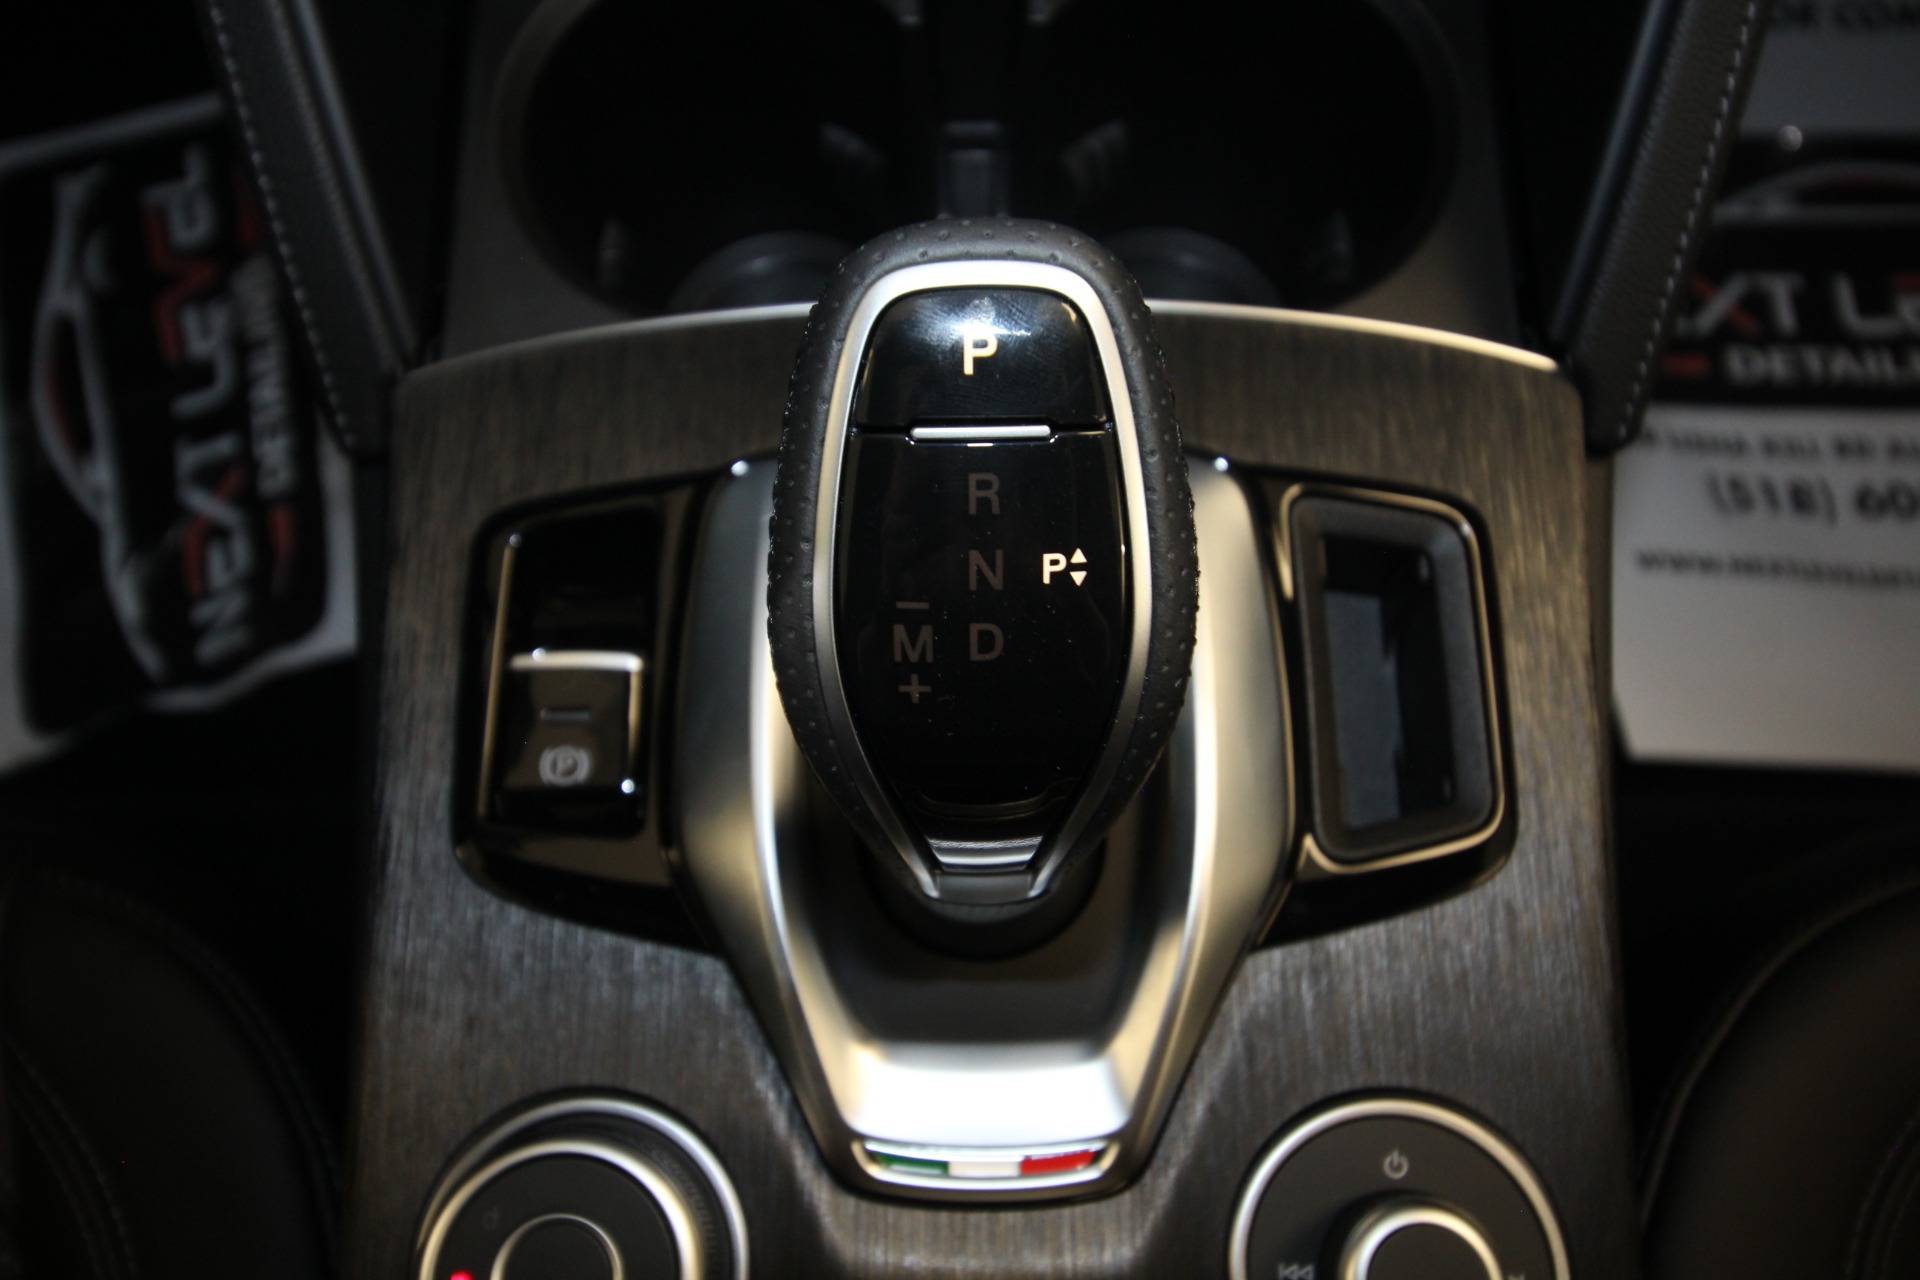 New 2024 WHITE Alfa Romeo STEVLIO SPRINT Sprint | Albany, NY